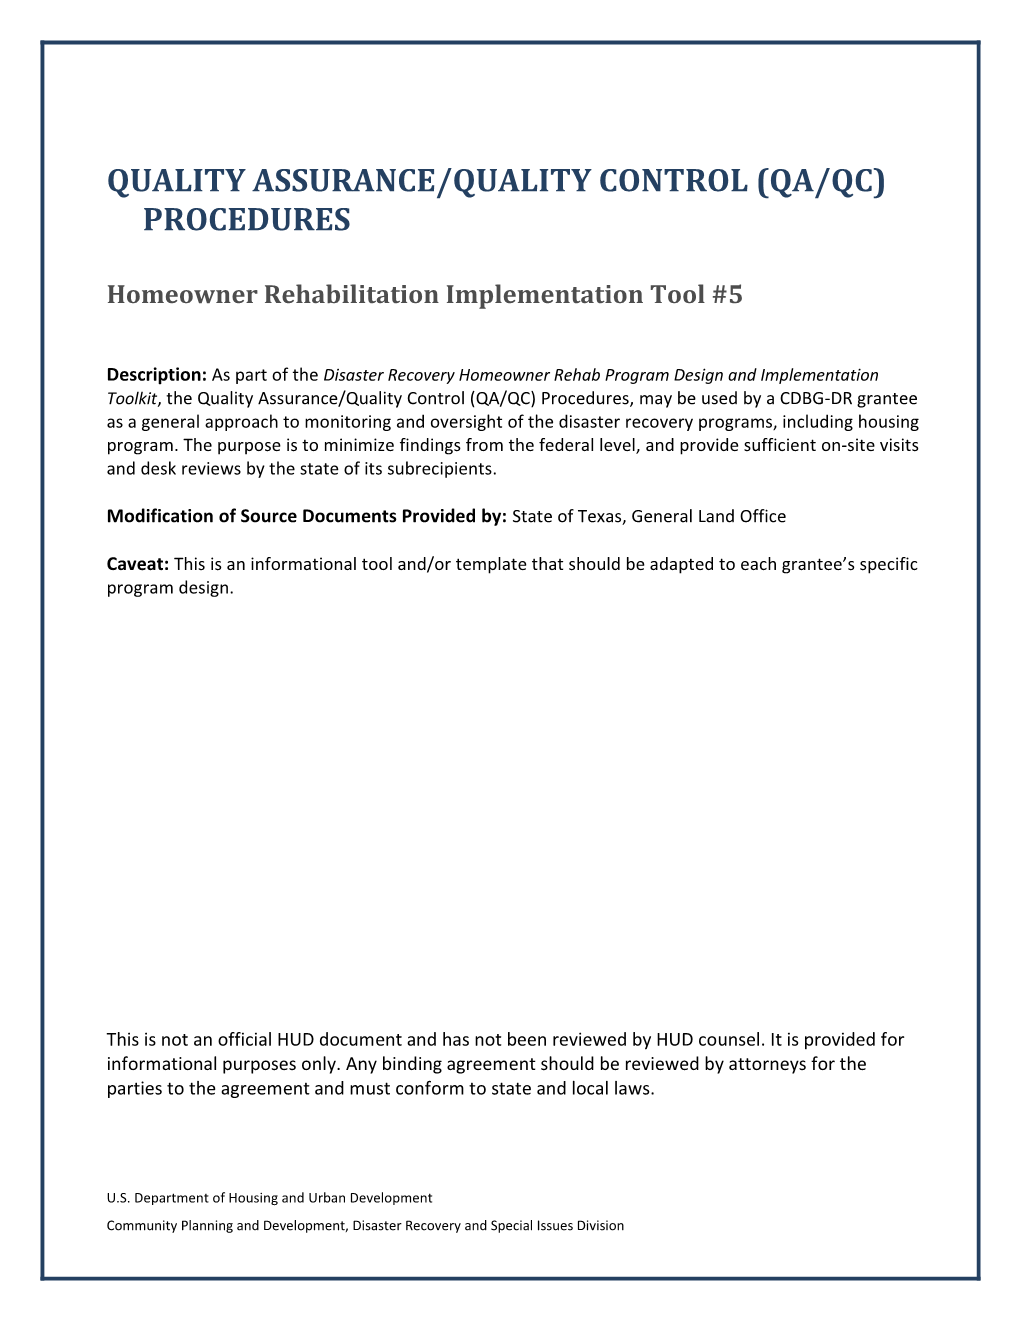 CDBG-DR Homeowner Rehab Quality Assurance/Quality Control (QA/QC) Procedures